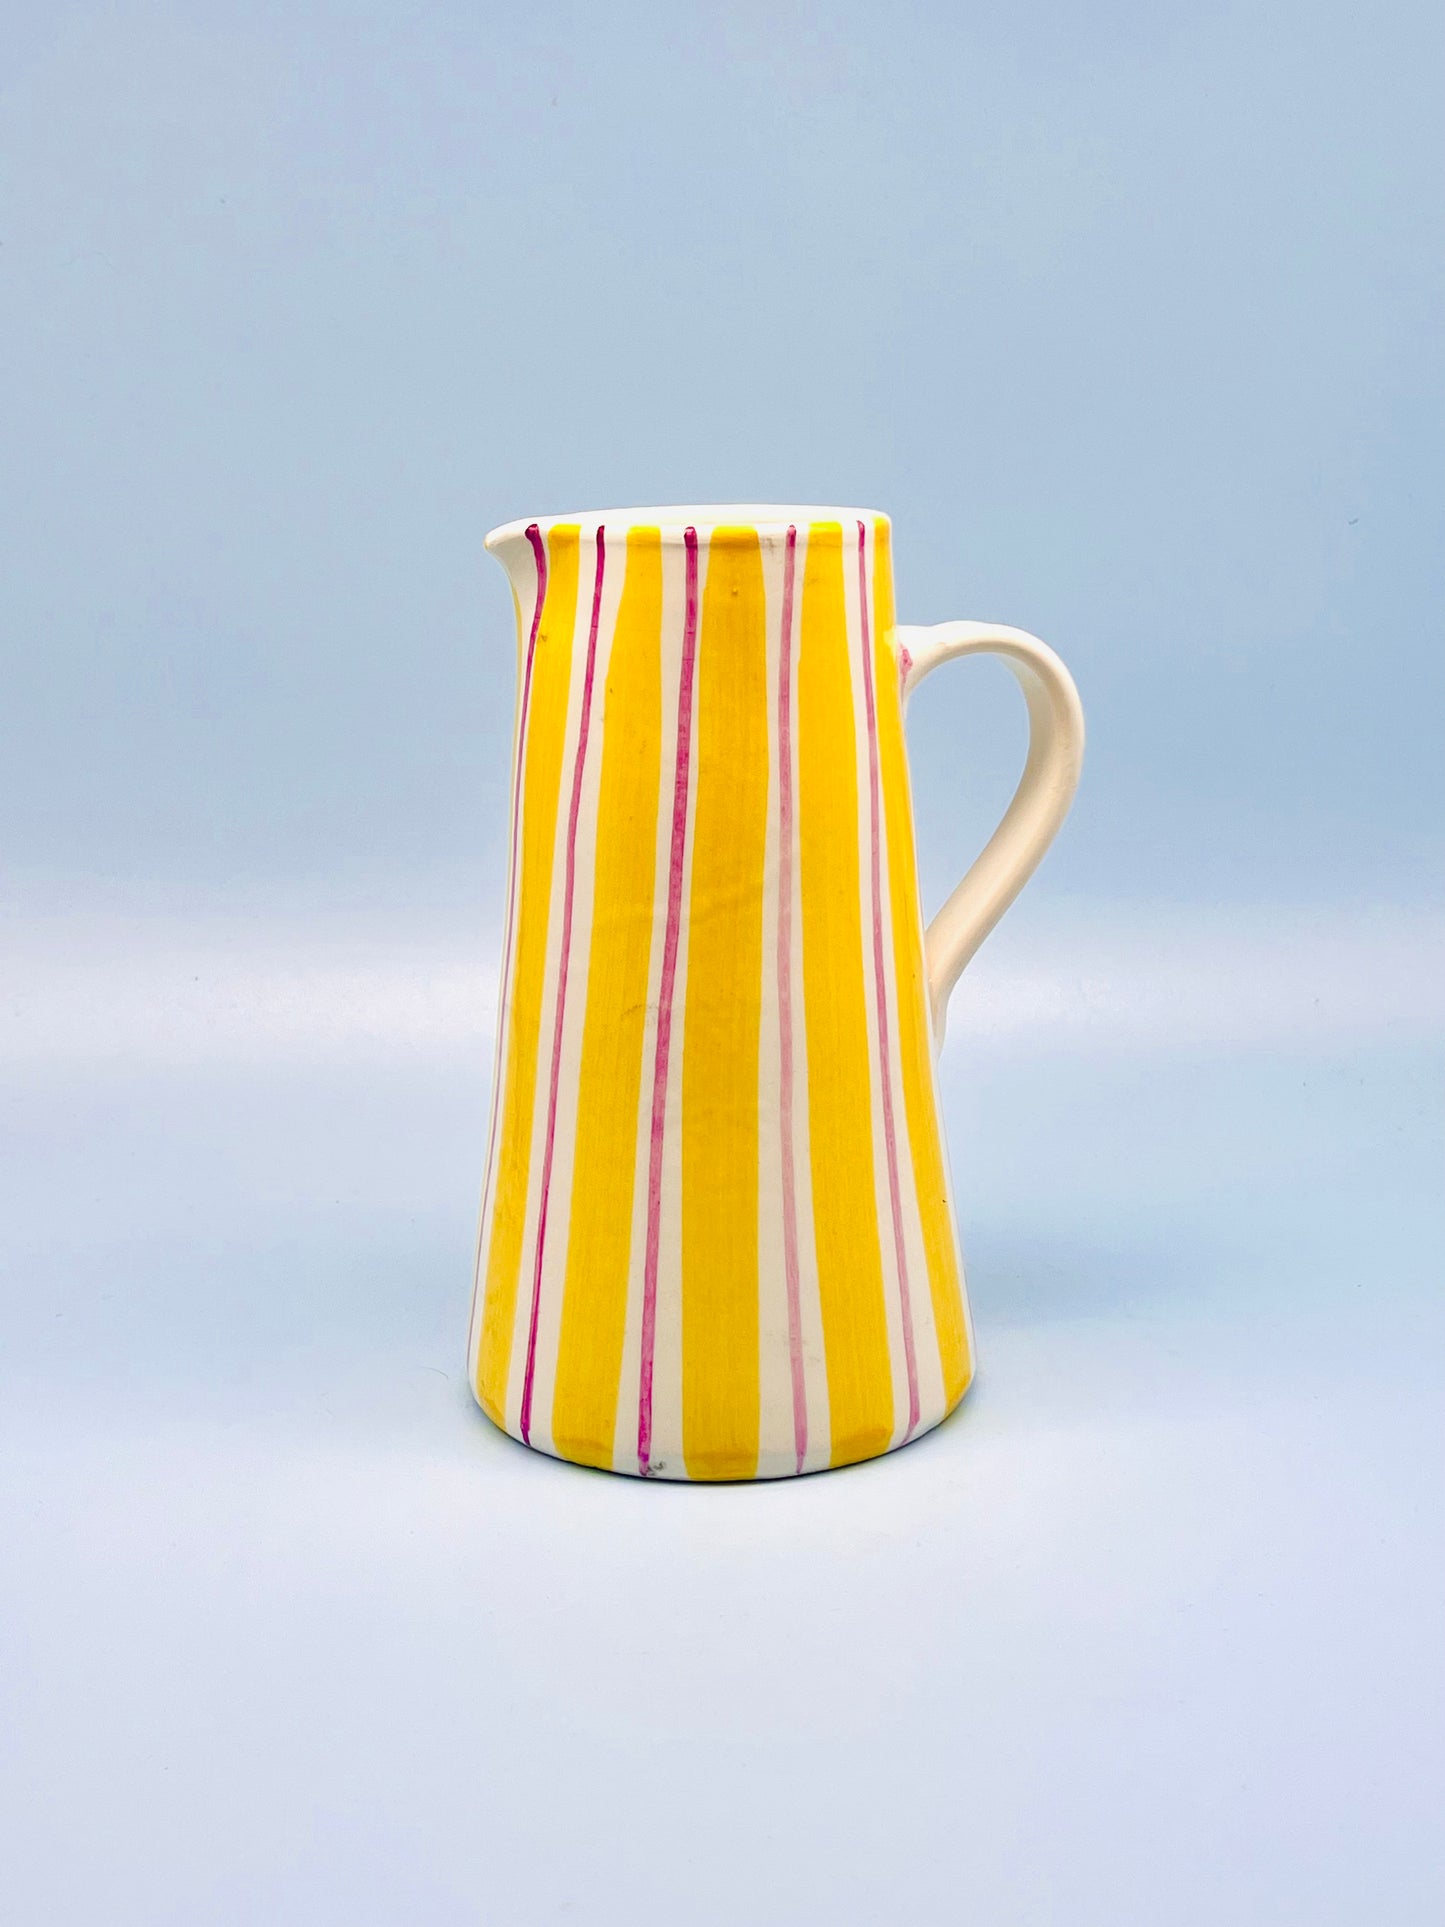 Jarra Stripes Yellow-Lila Morueco 1,75L